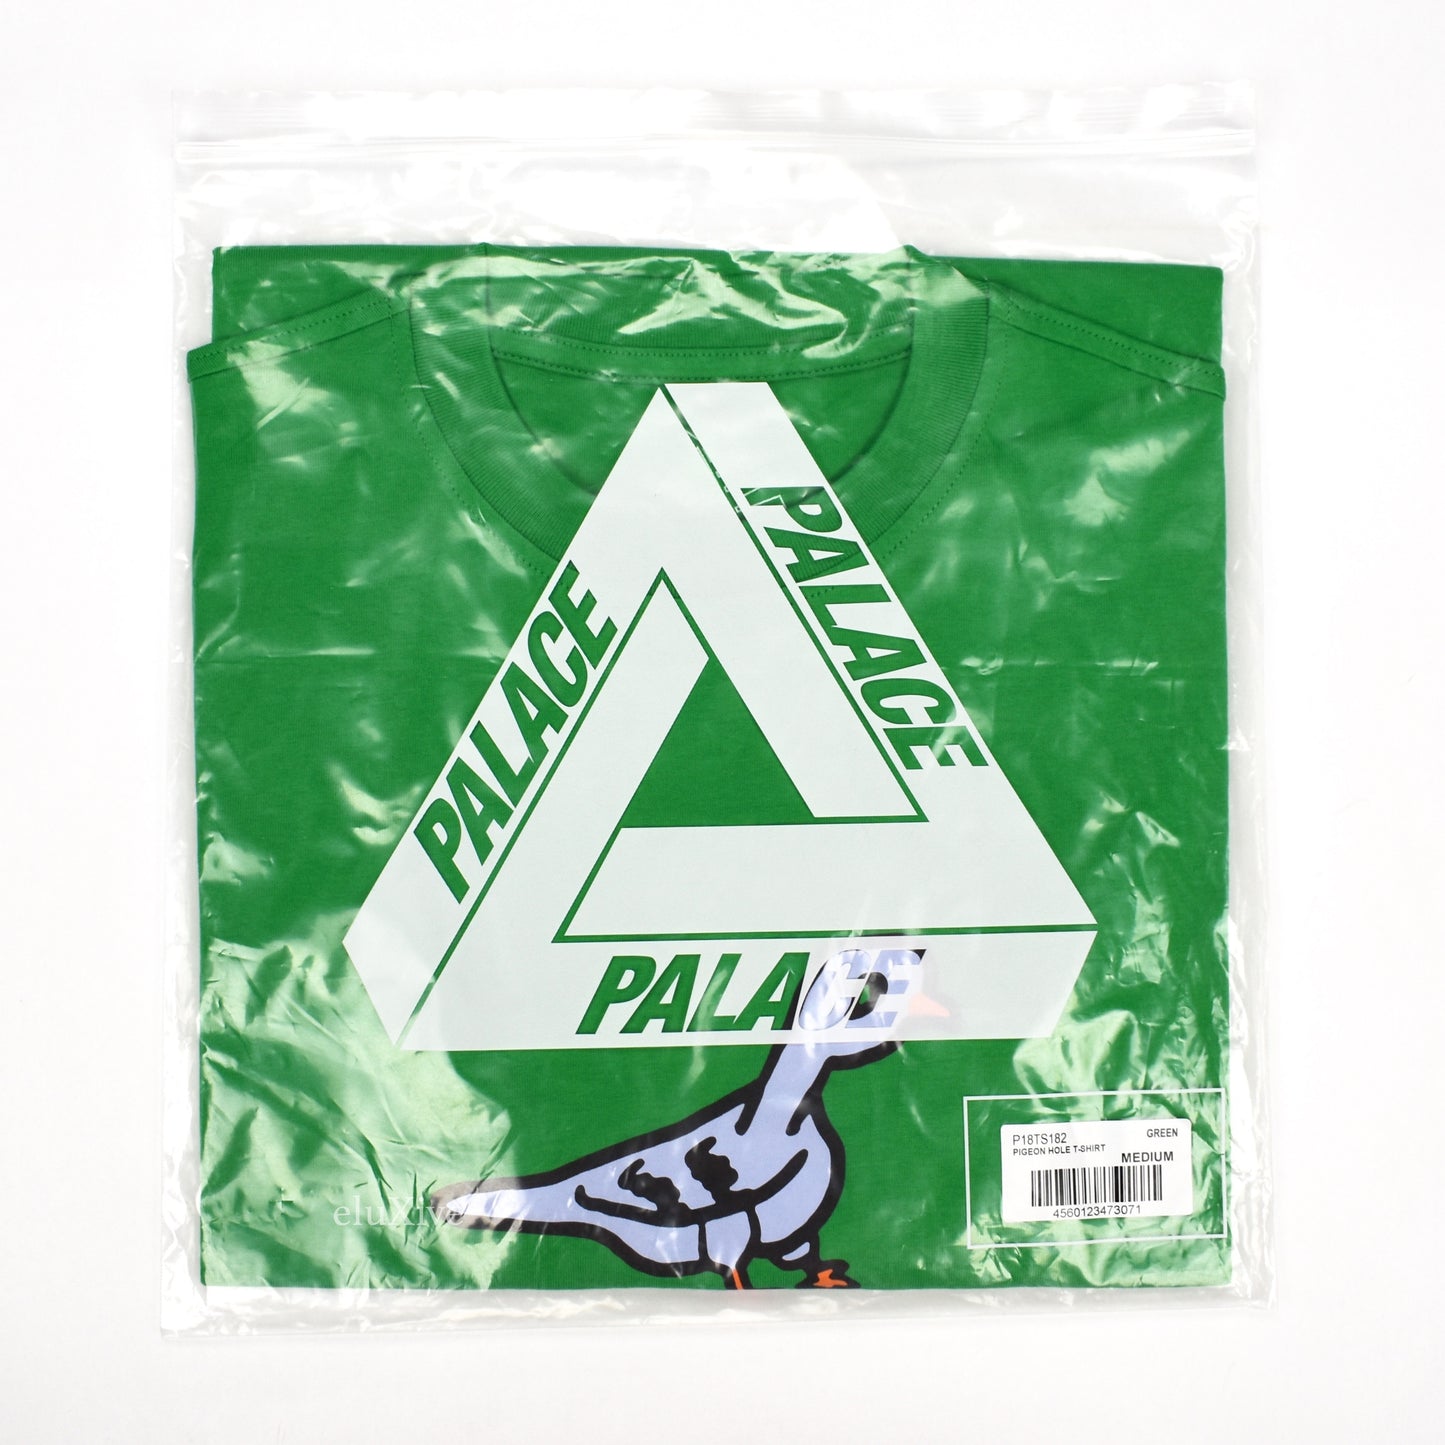 Palace - Pigeon Hole P-Logo T-Shirt (Green)